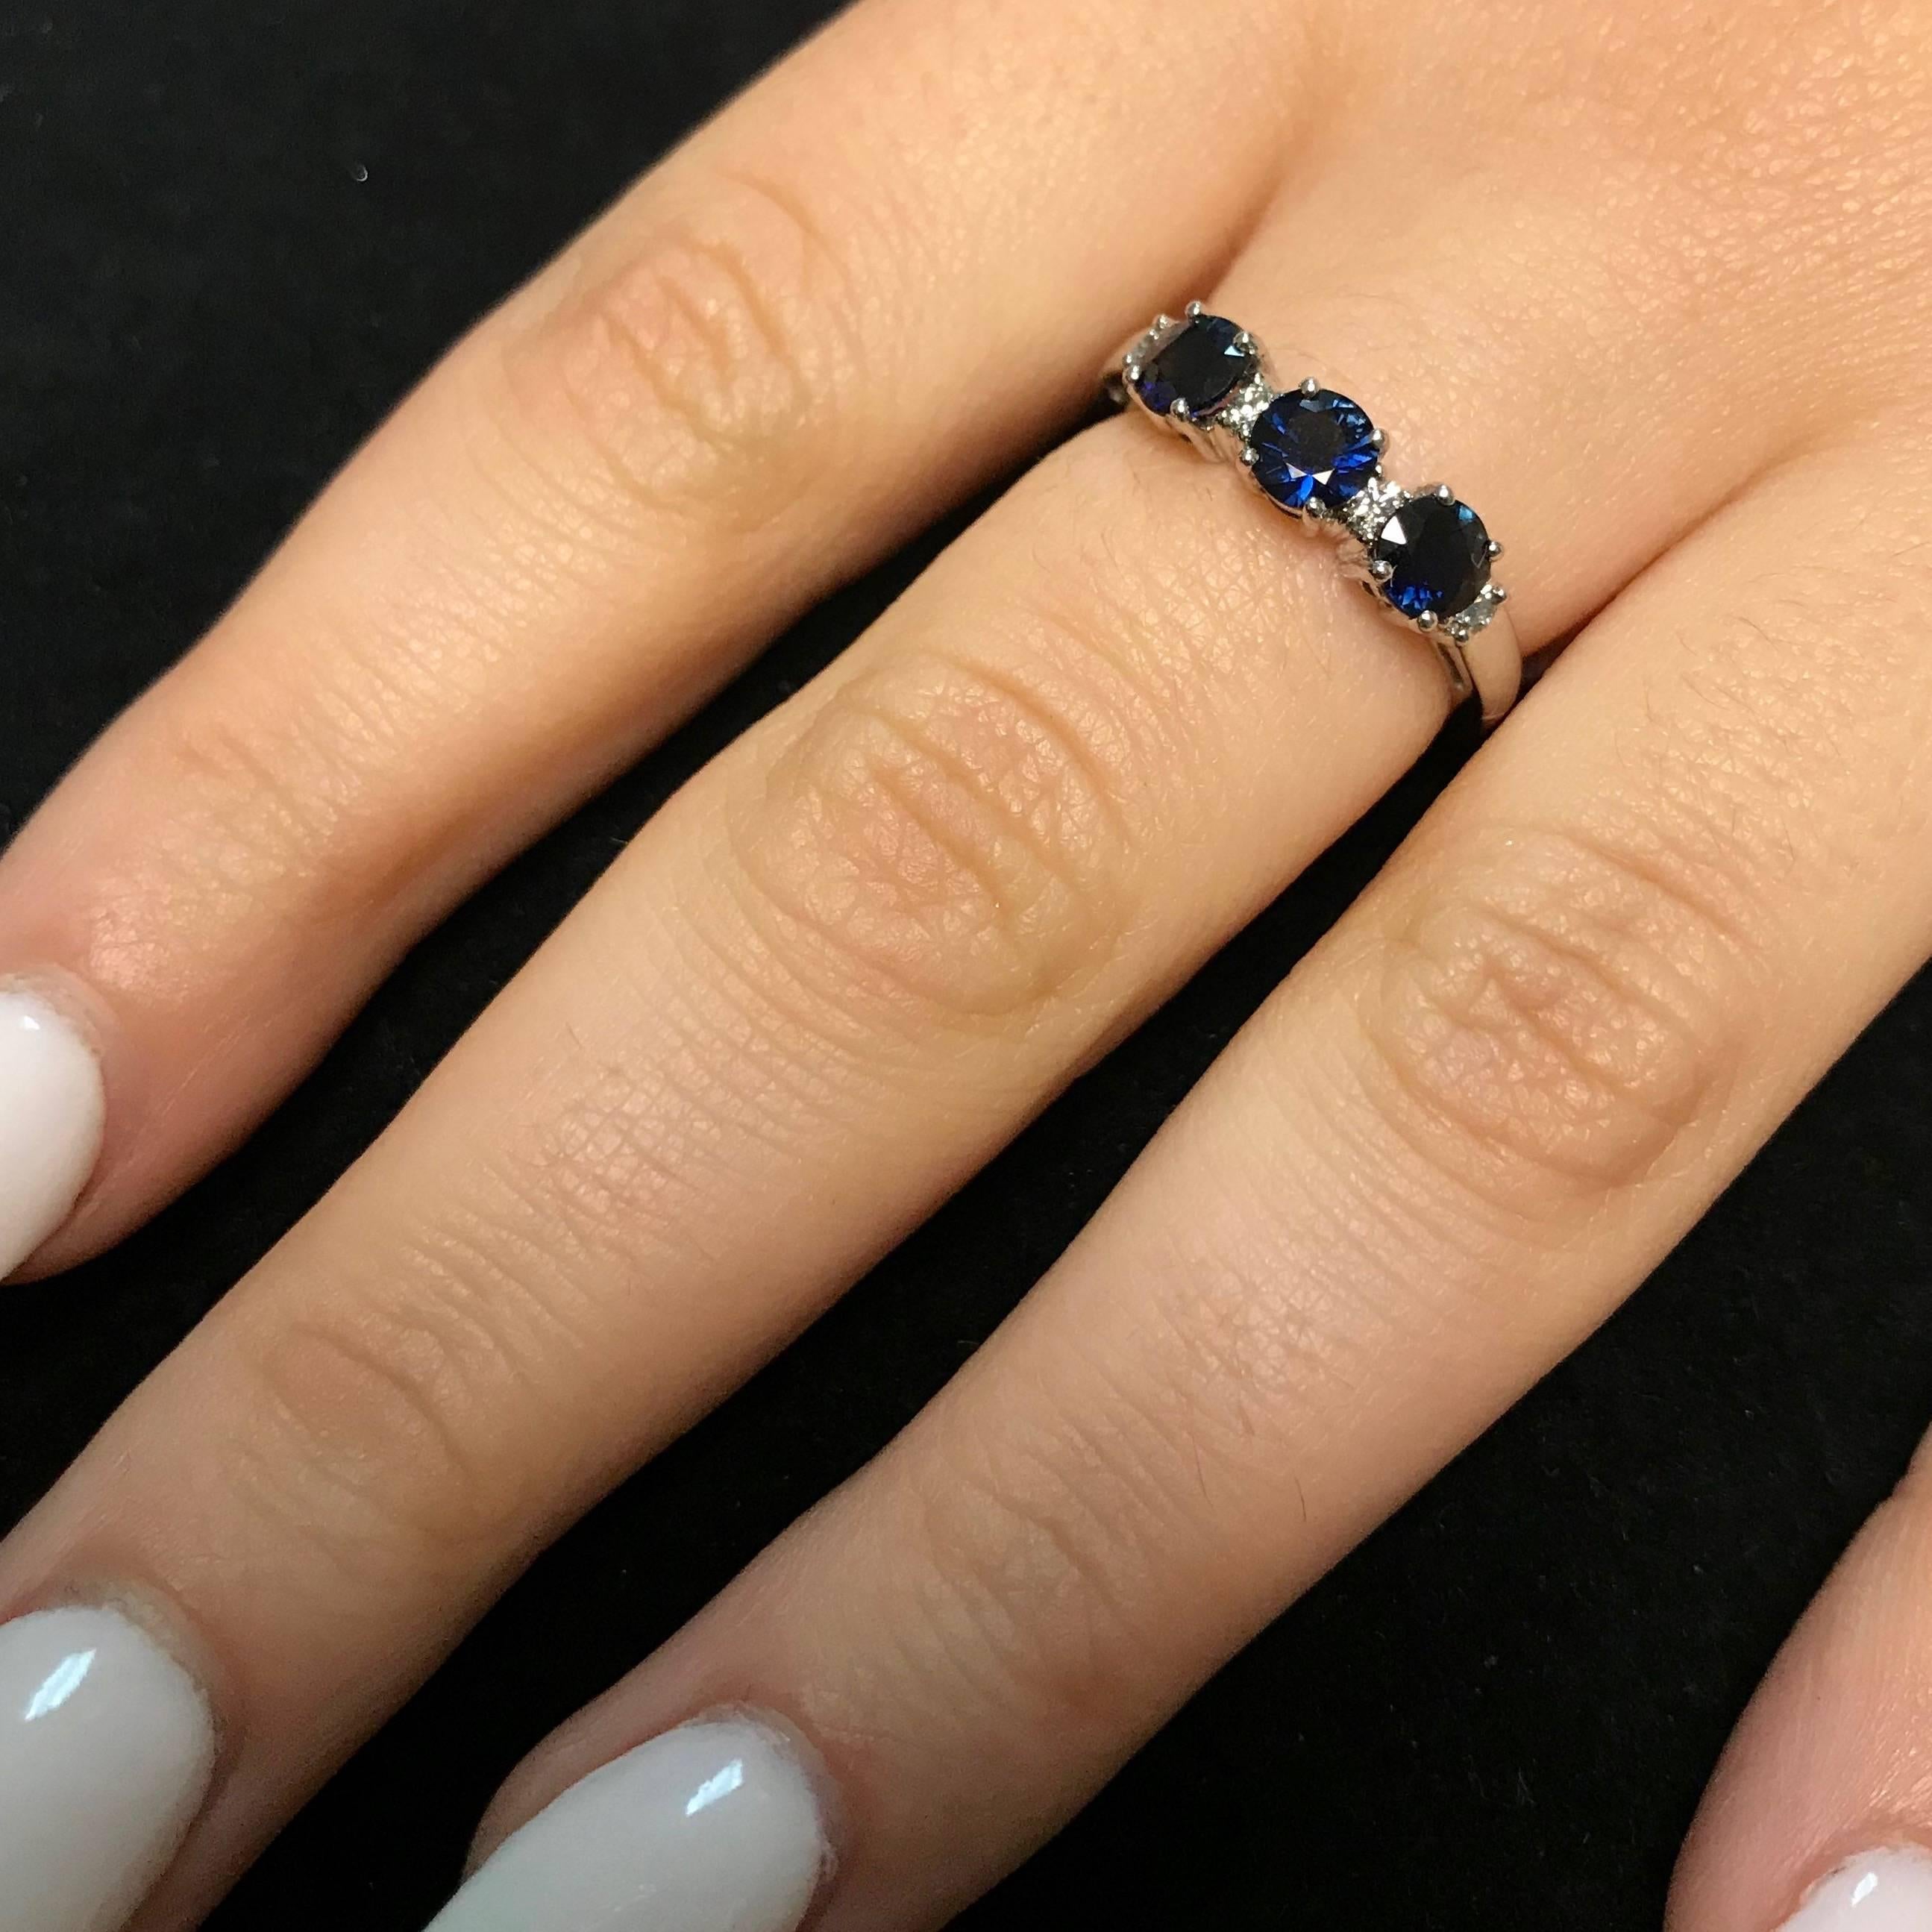 3 carat blue sapphire ring